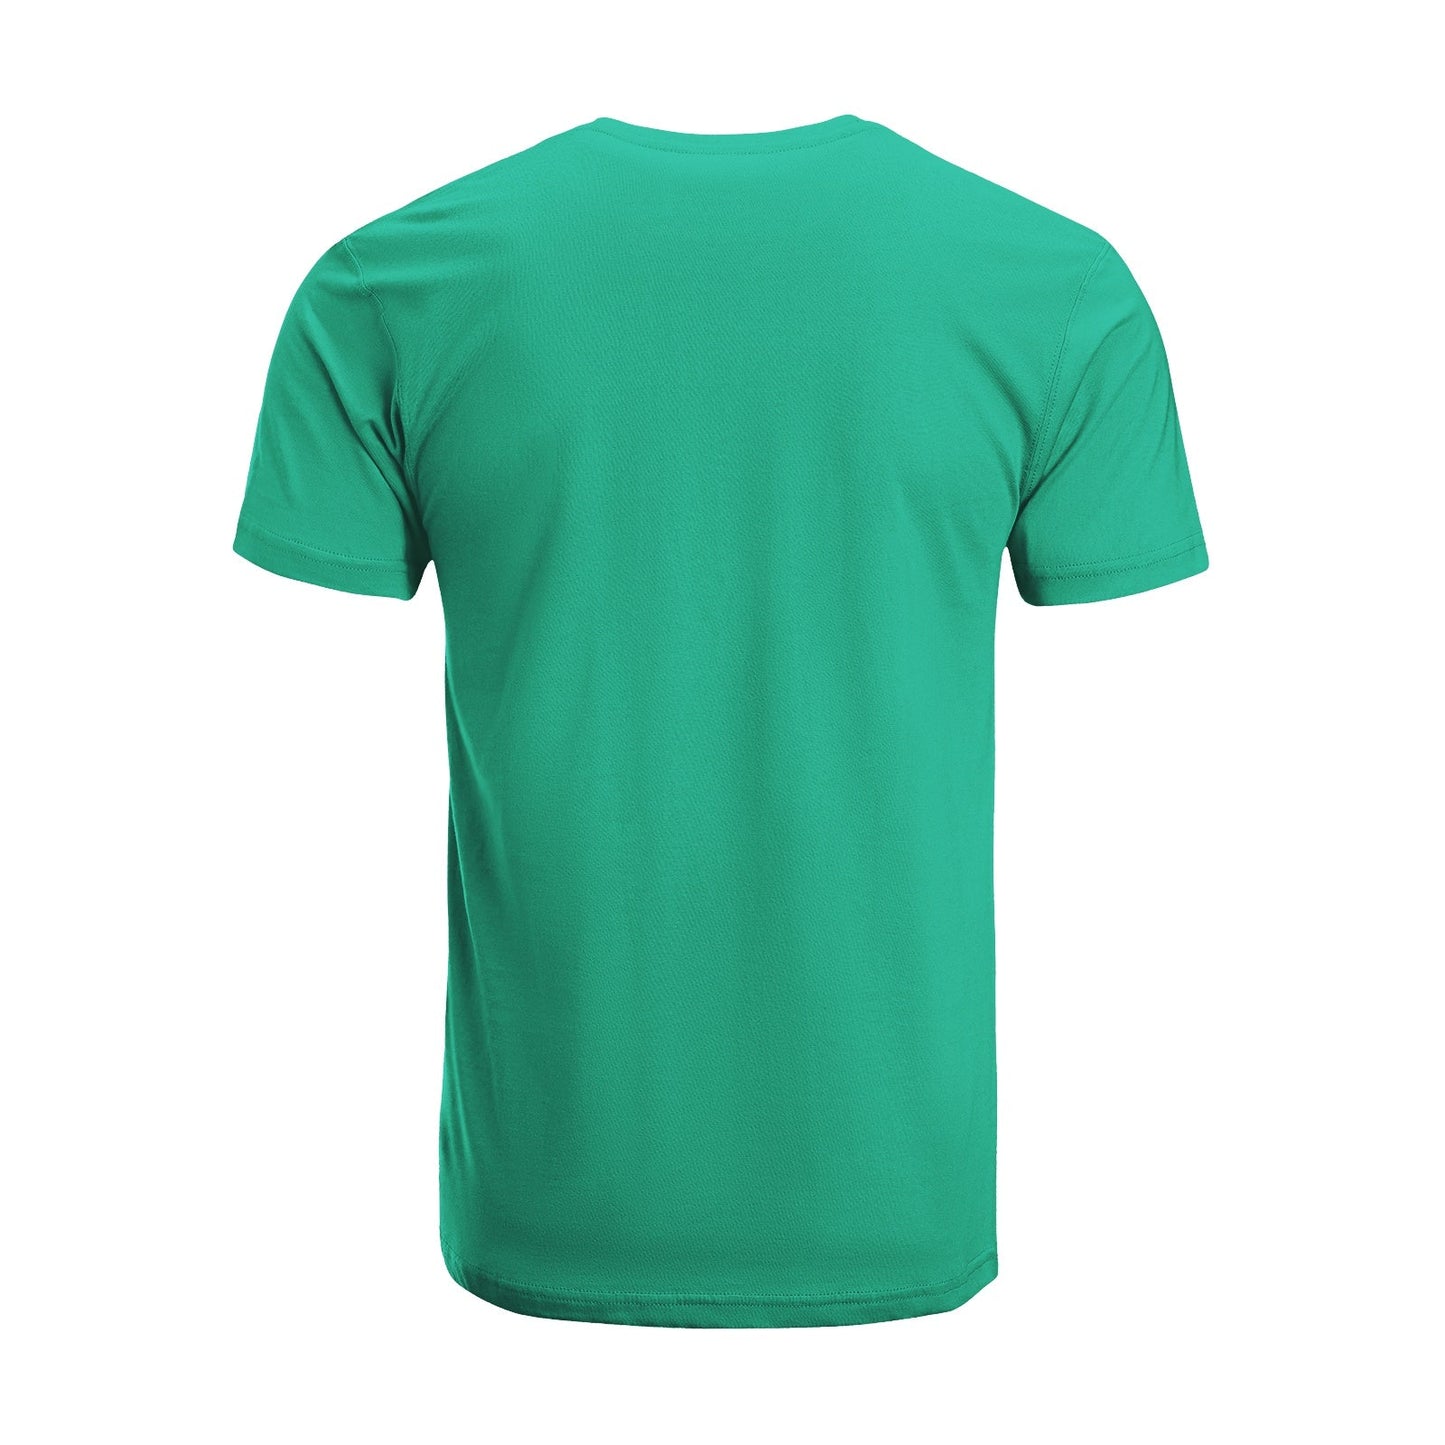 Unisex Short Sleeve Crew Neck Cotton Jersey T-Shirt USA 10